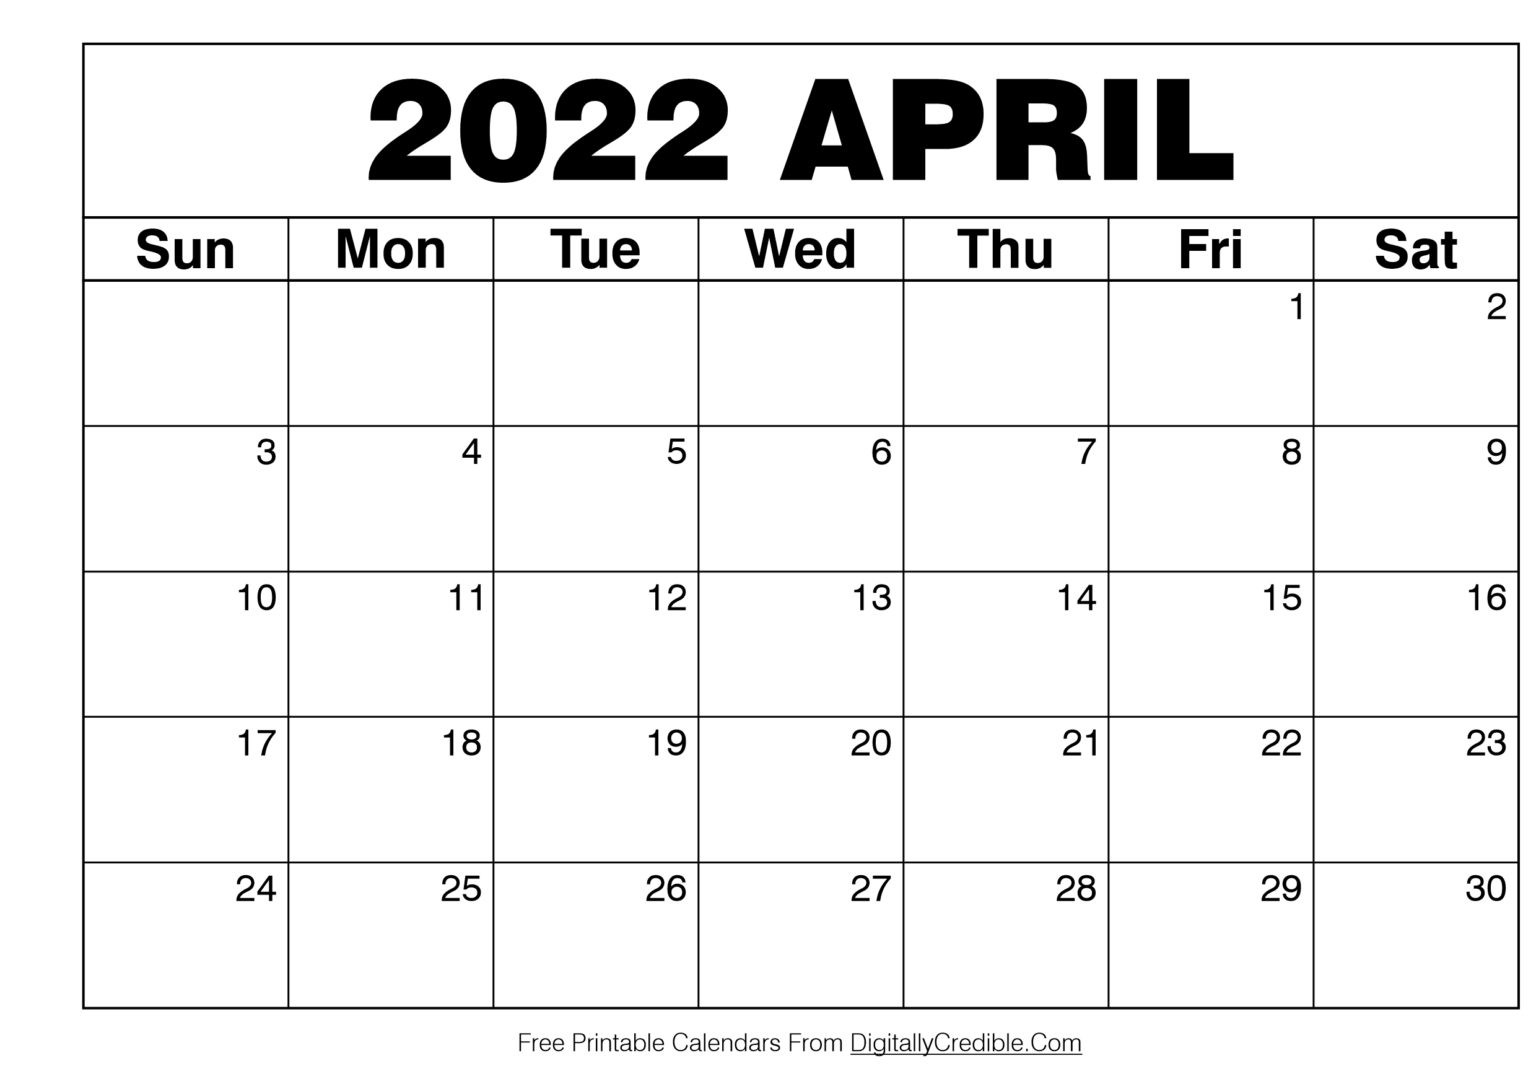 April 2022 Calendar Printable - Desk &amp; Wall  April Free Printable Calendar 2022